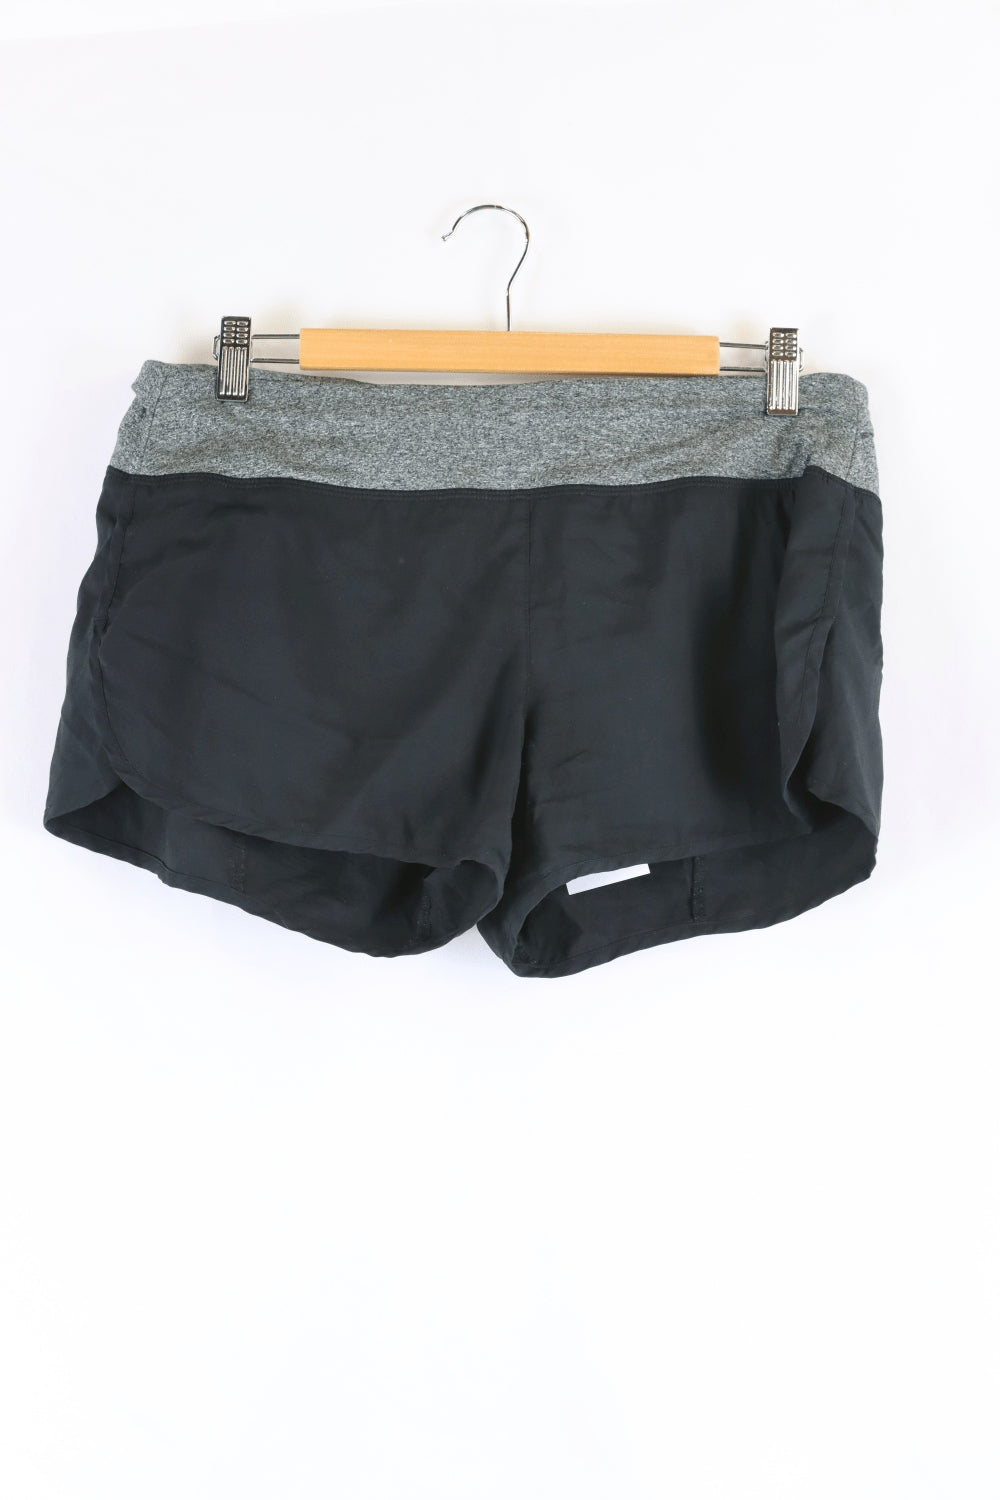 Nike Black And Grey Shorts M